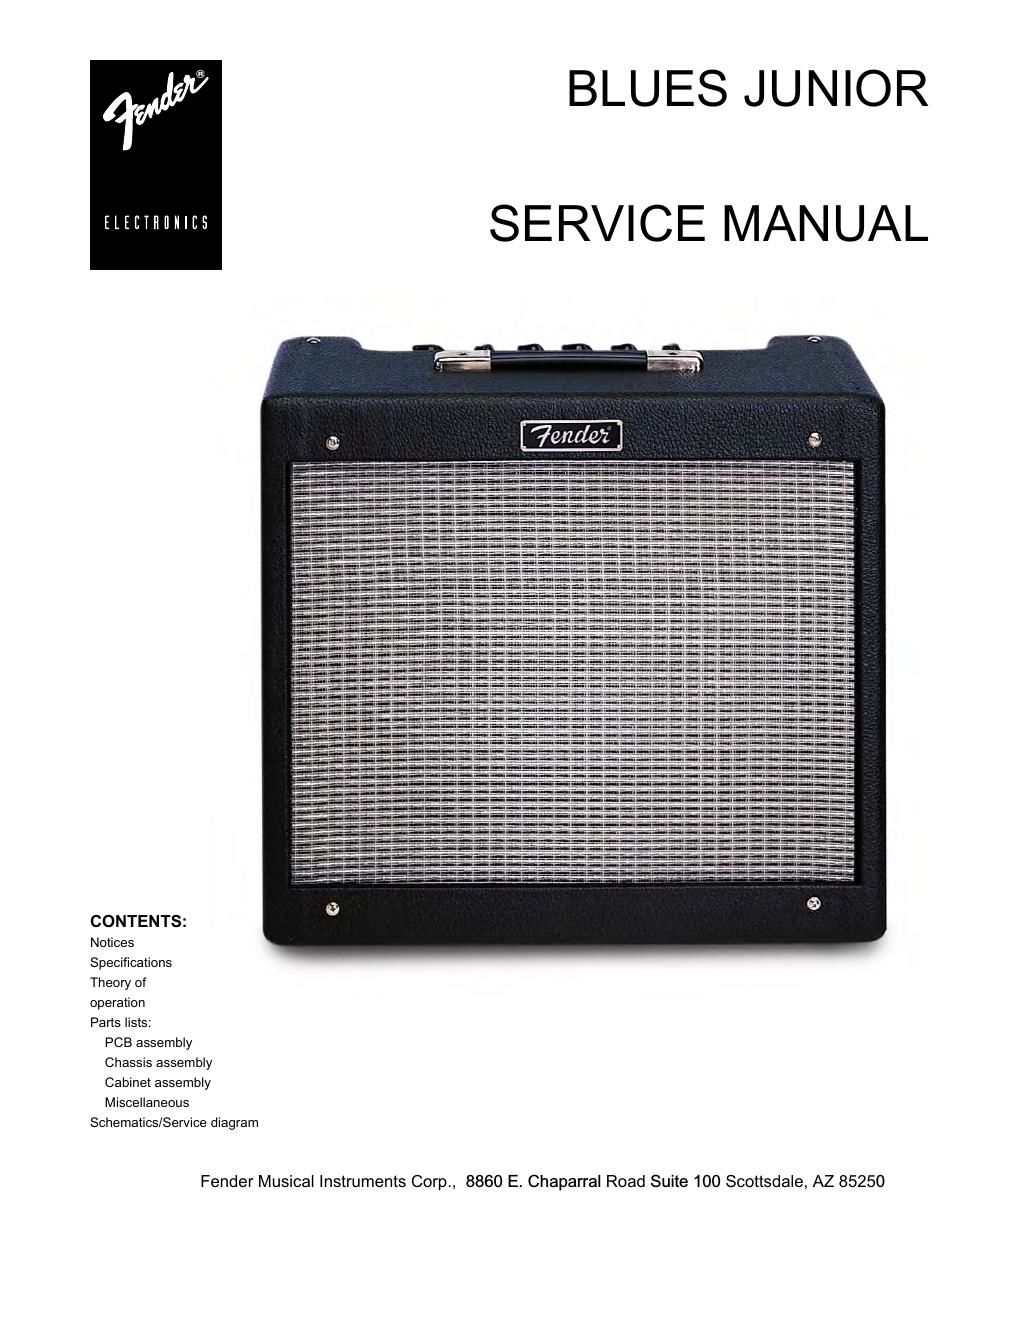 fender blues junior service manual